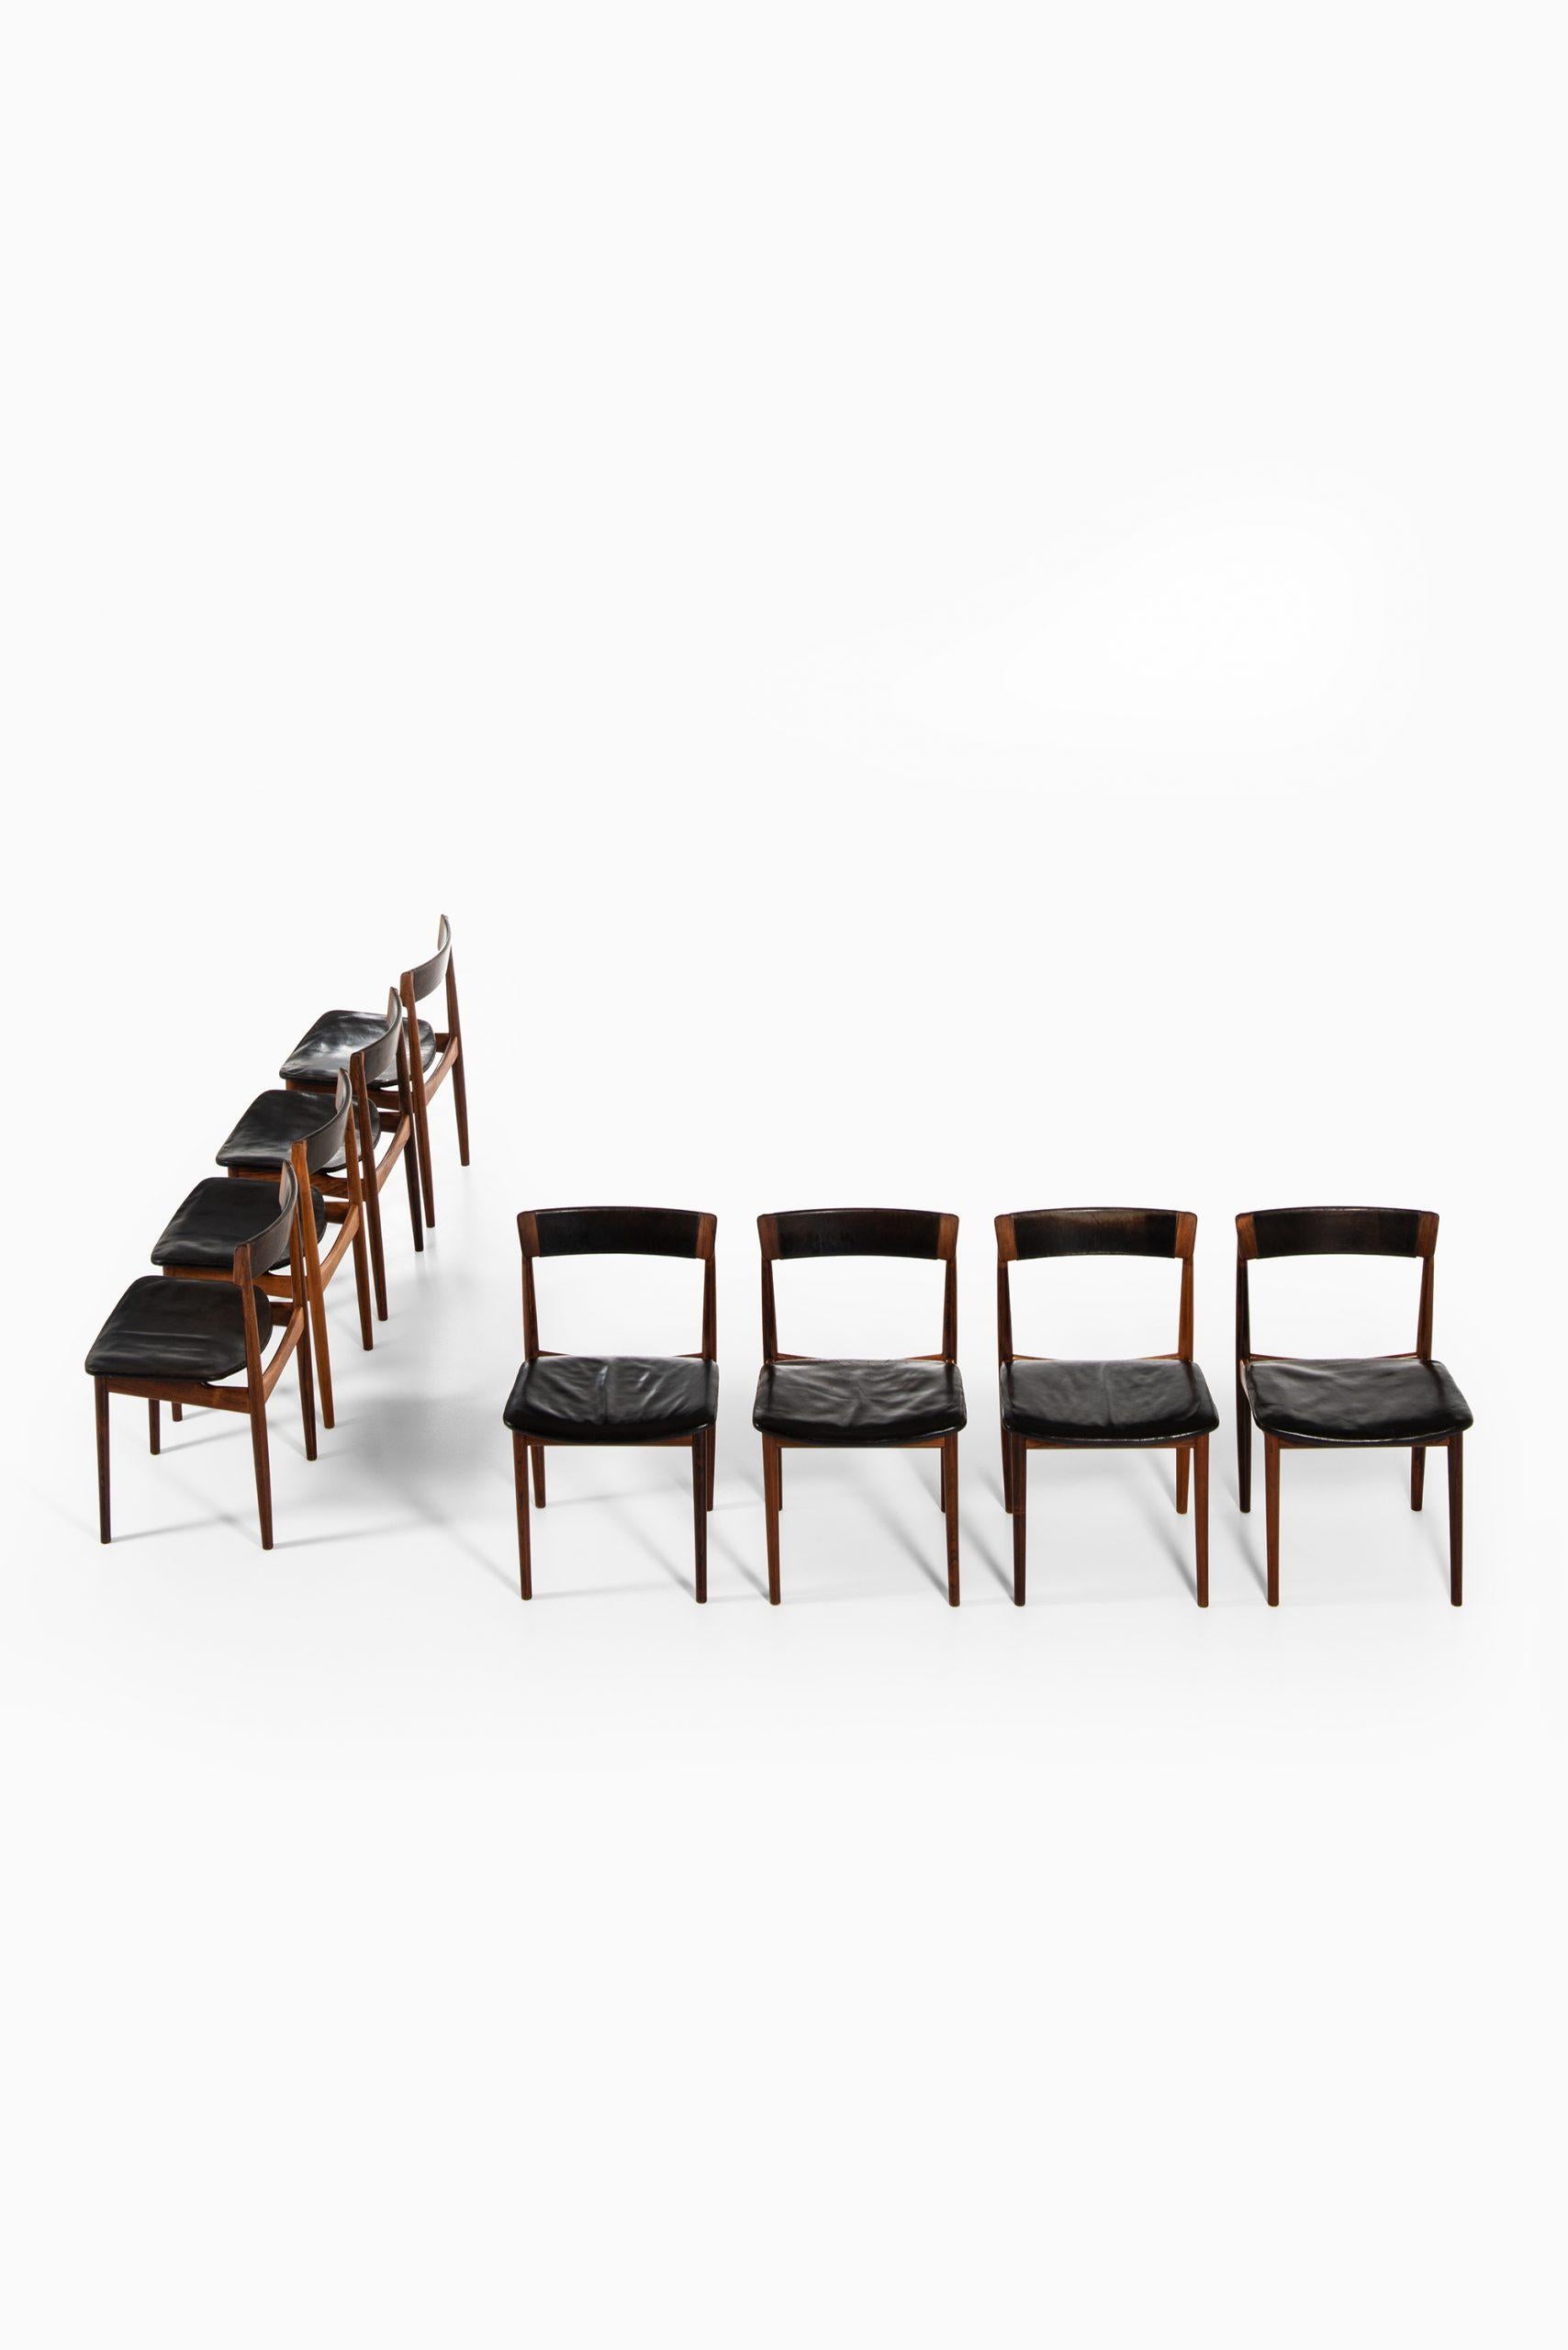 Rare set of 8 dining chairs model 39 designed by Henry Rosengren Hansen. Produced by Brande møbelfabrik in Denmark.